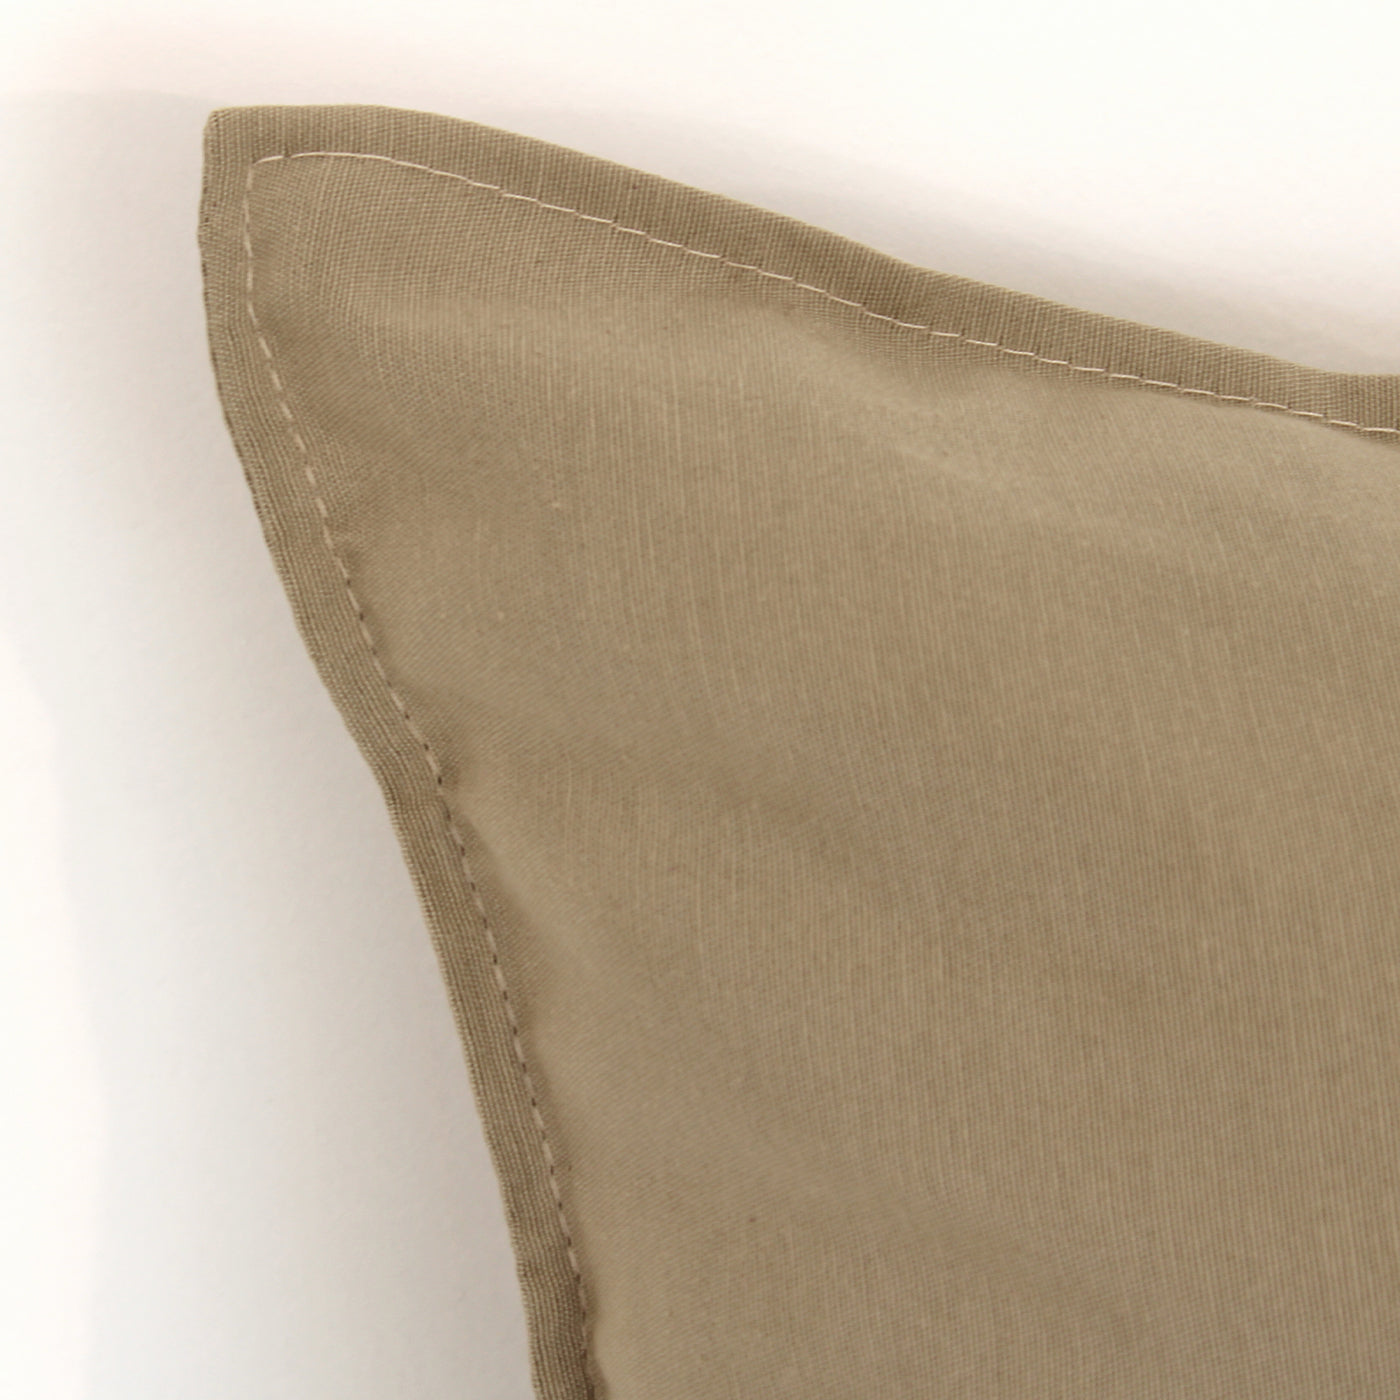 Opaque Hazelnut Set of 2 cushions - Alternative view 2